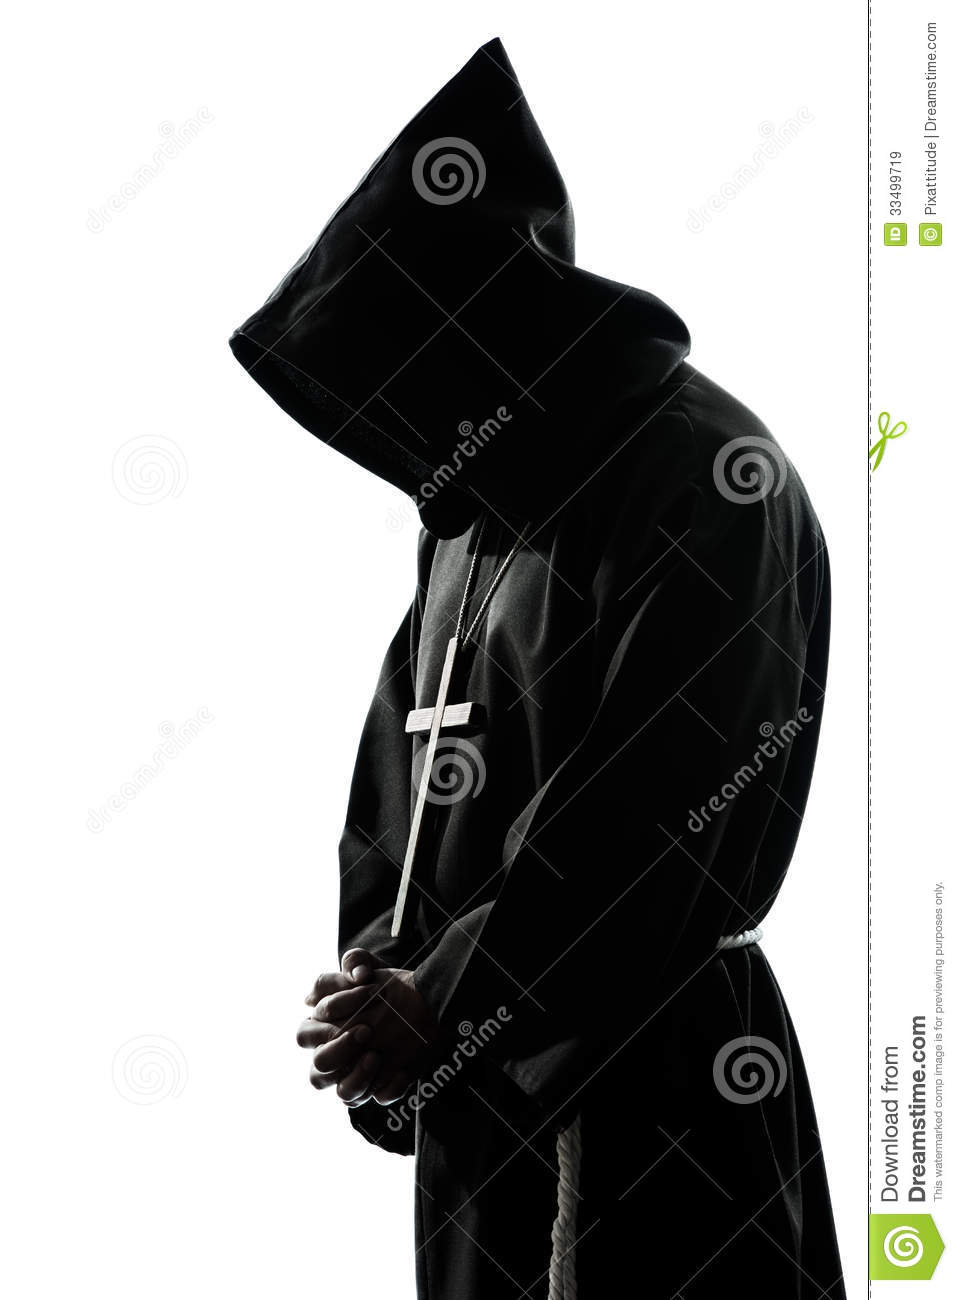 Man Monk Priest Silhouette Praying Royalty Free Stock Images   Image